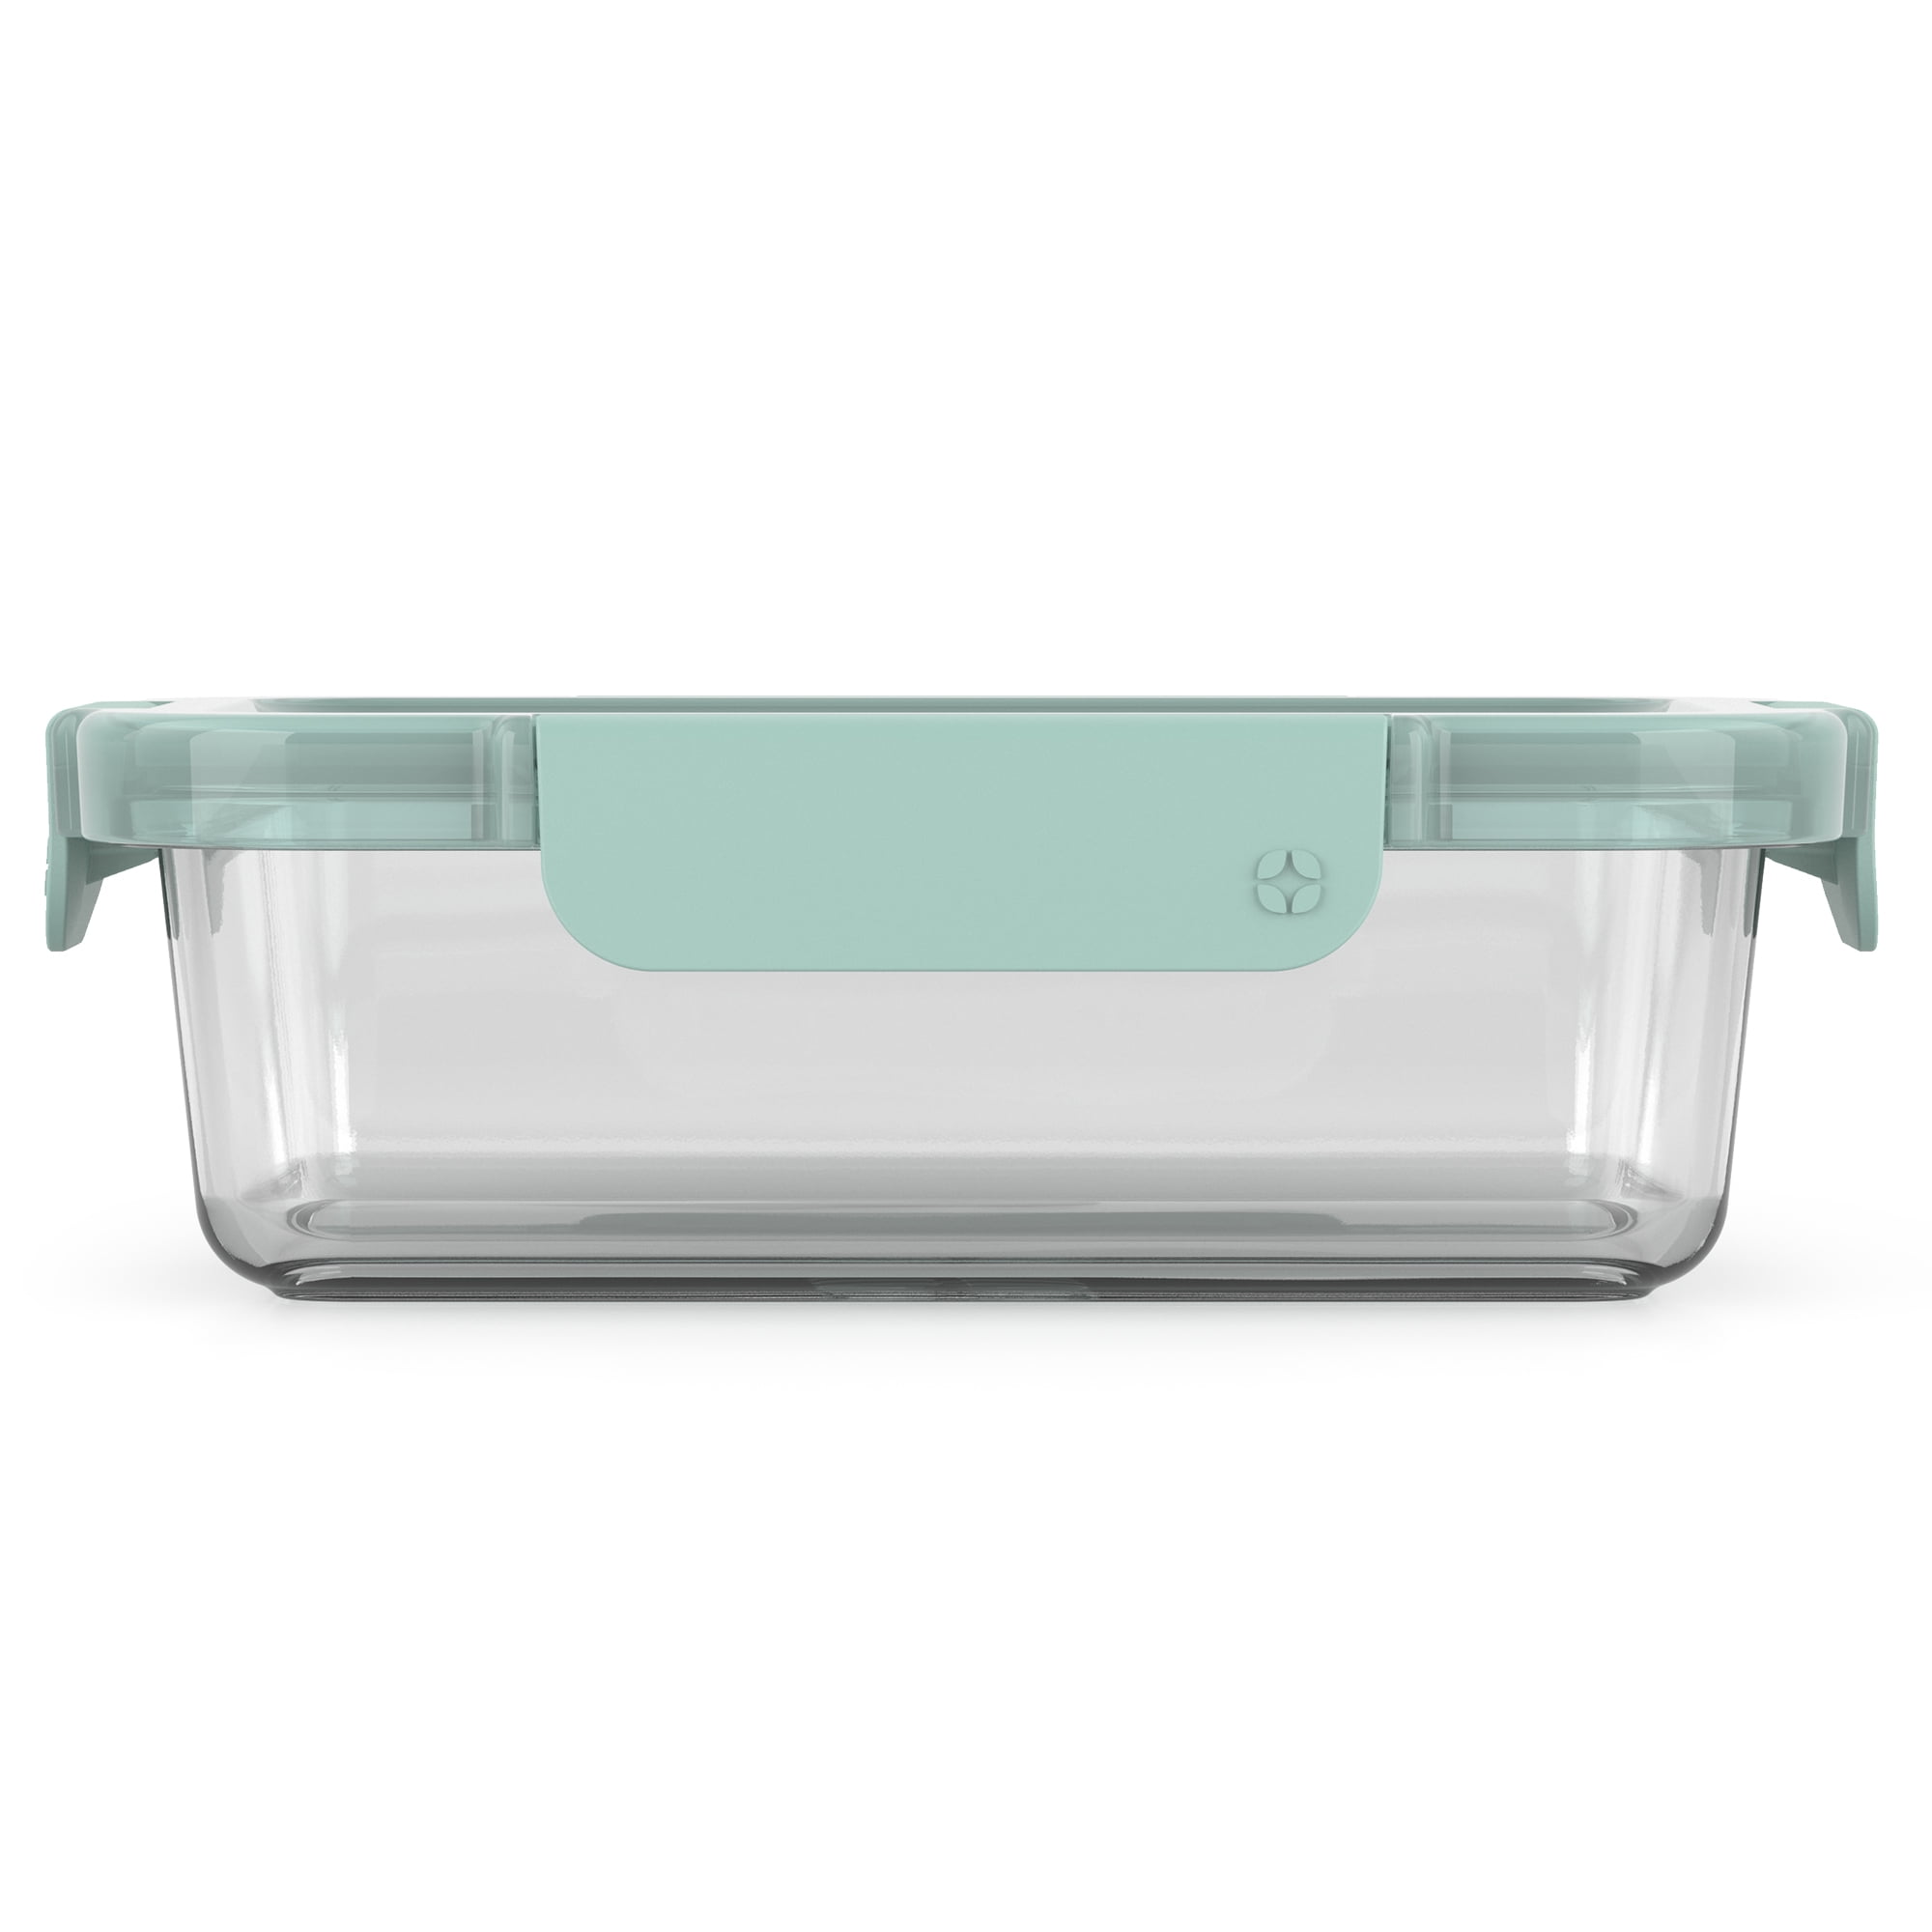 Ello Duraglass Reusable Glass Condiment Containers with Leak Proof Plastic Lid, 4 oz, Set of 3